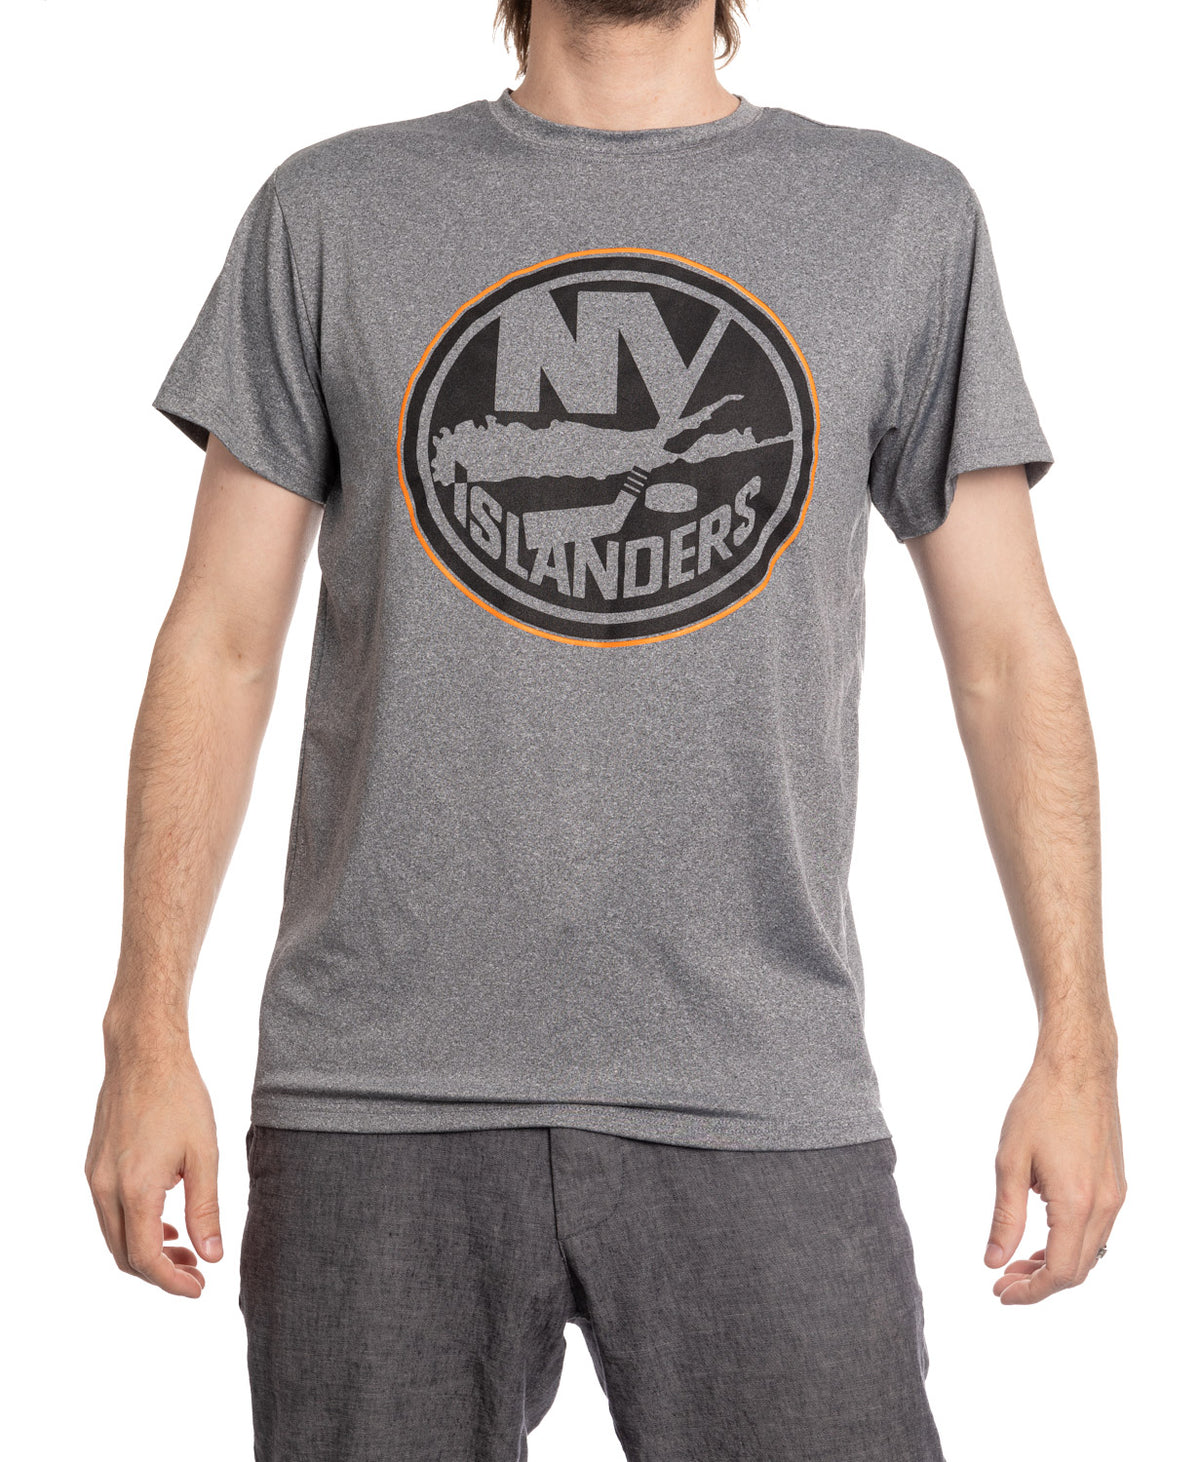 New York Islanders NHL Men's Performance Rash Guard Base Layer Moisture-Wicking T-Shirt - Grey